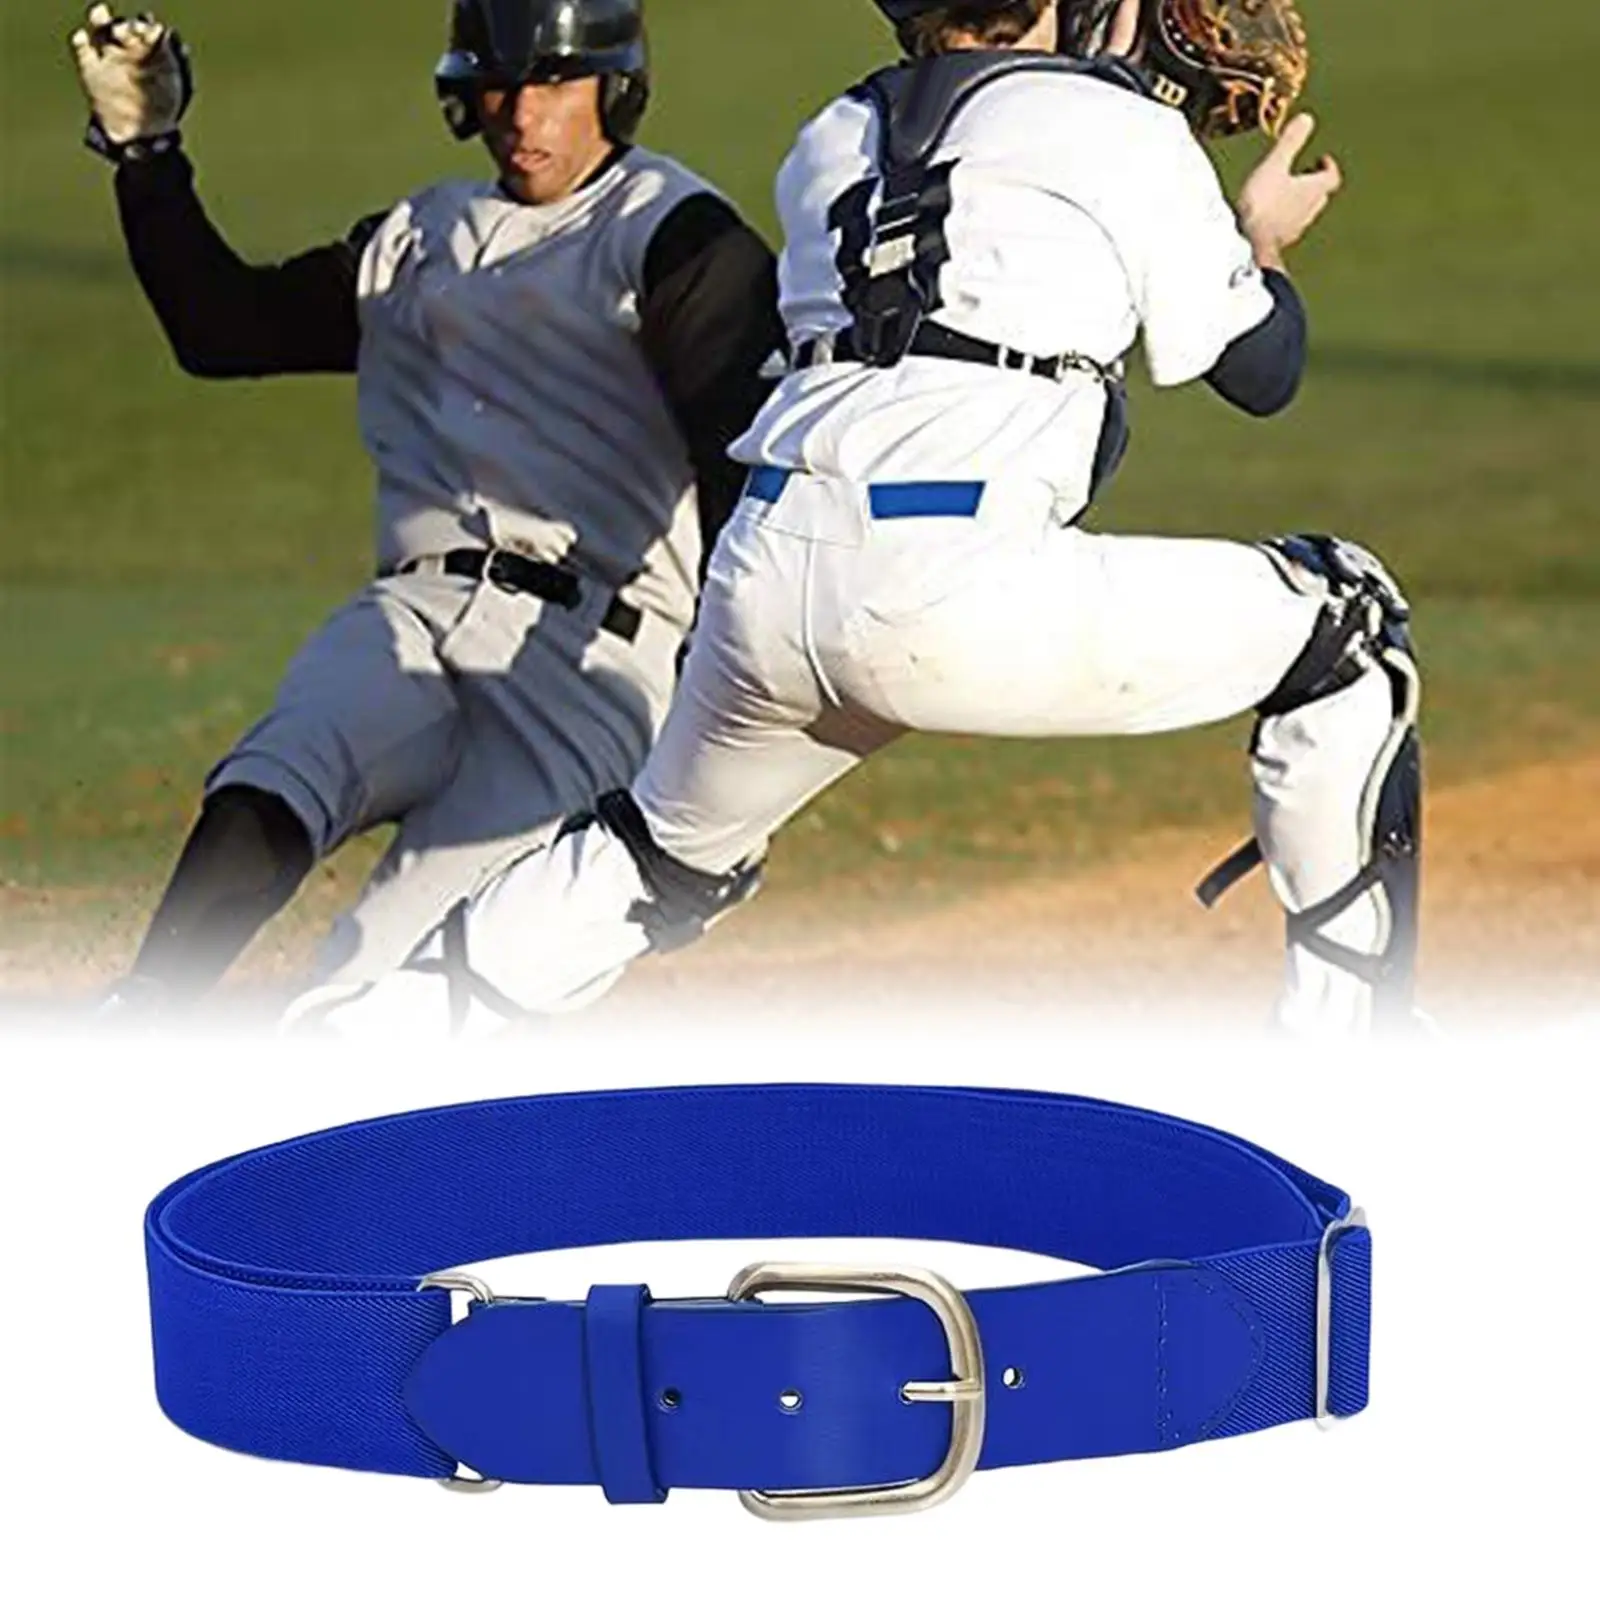 Baseball Belt Softball Belt Waistband for Women or Men ,Belt with Adjuster and Belt Holes